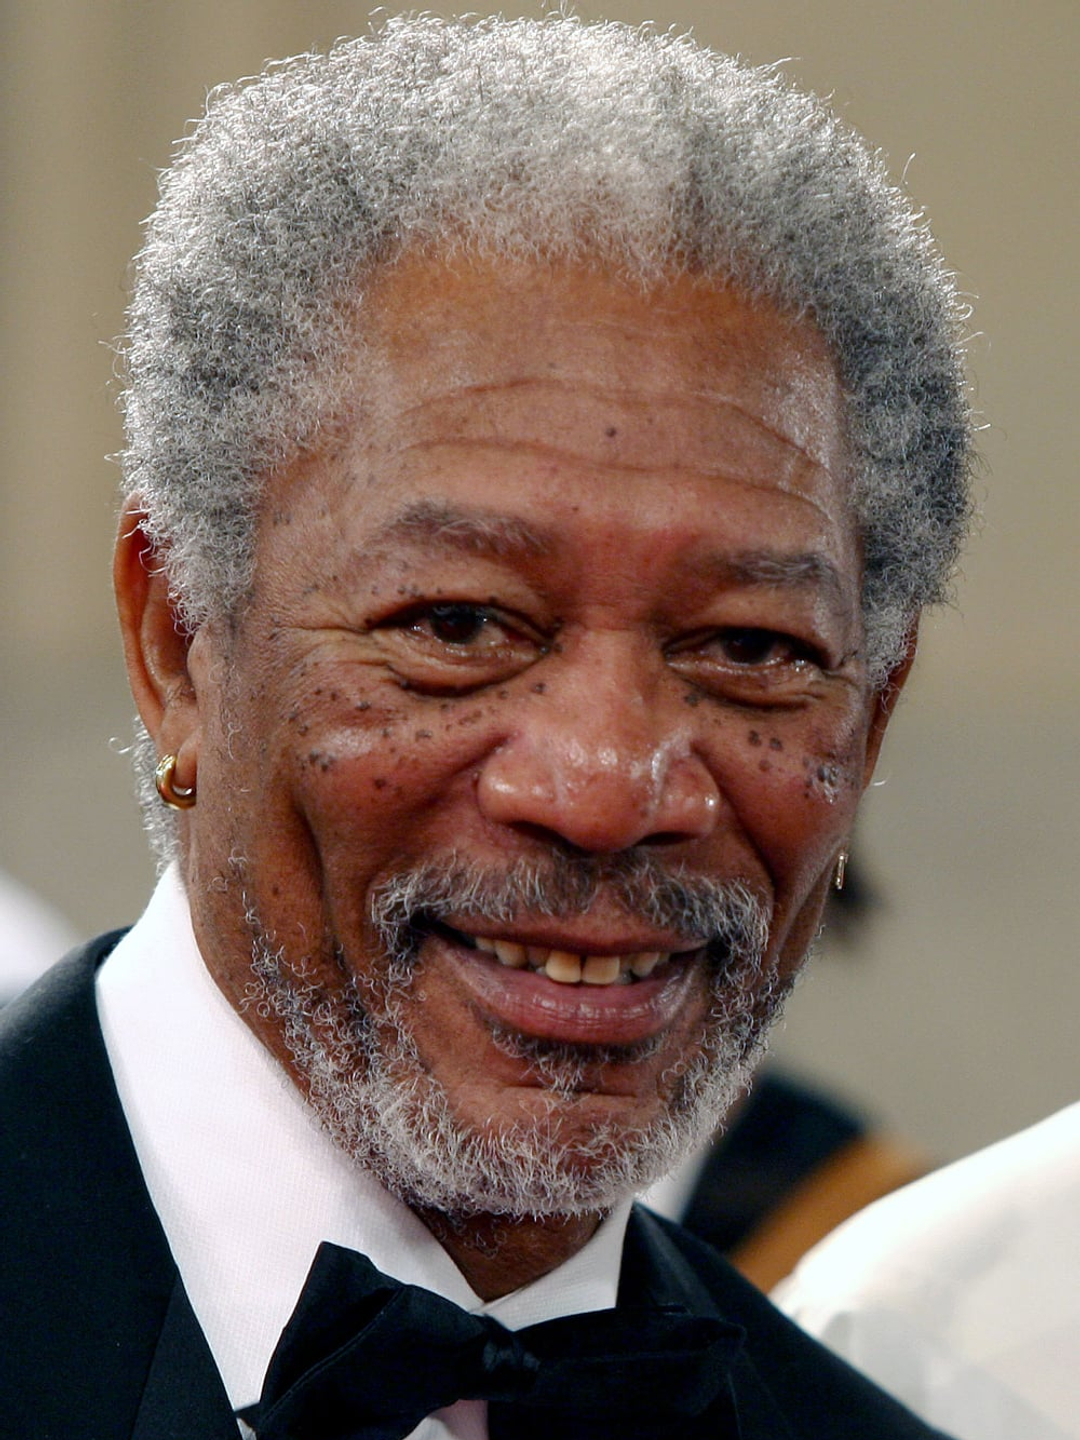 Morgan Freeman personal traits